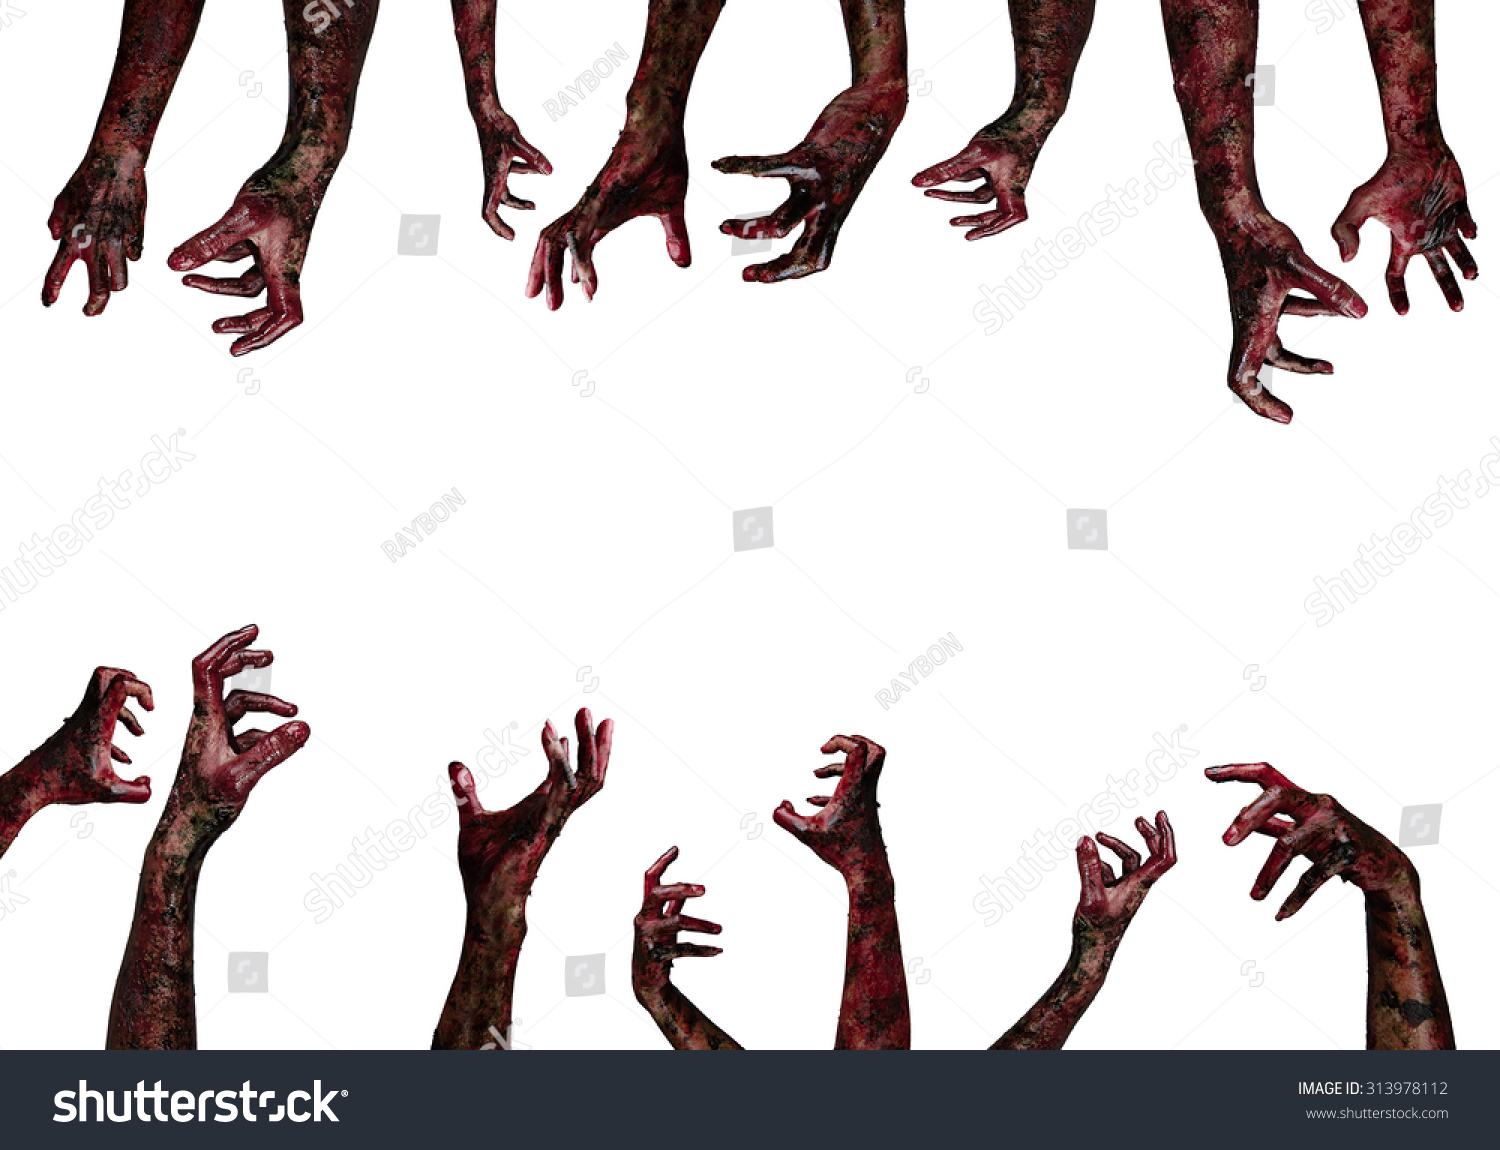 zombie hand clipart - photo #49